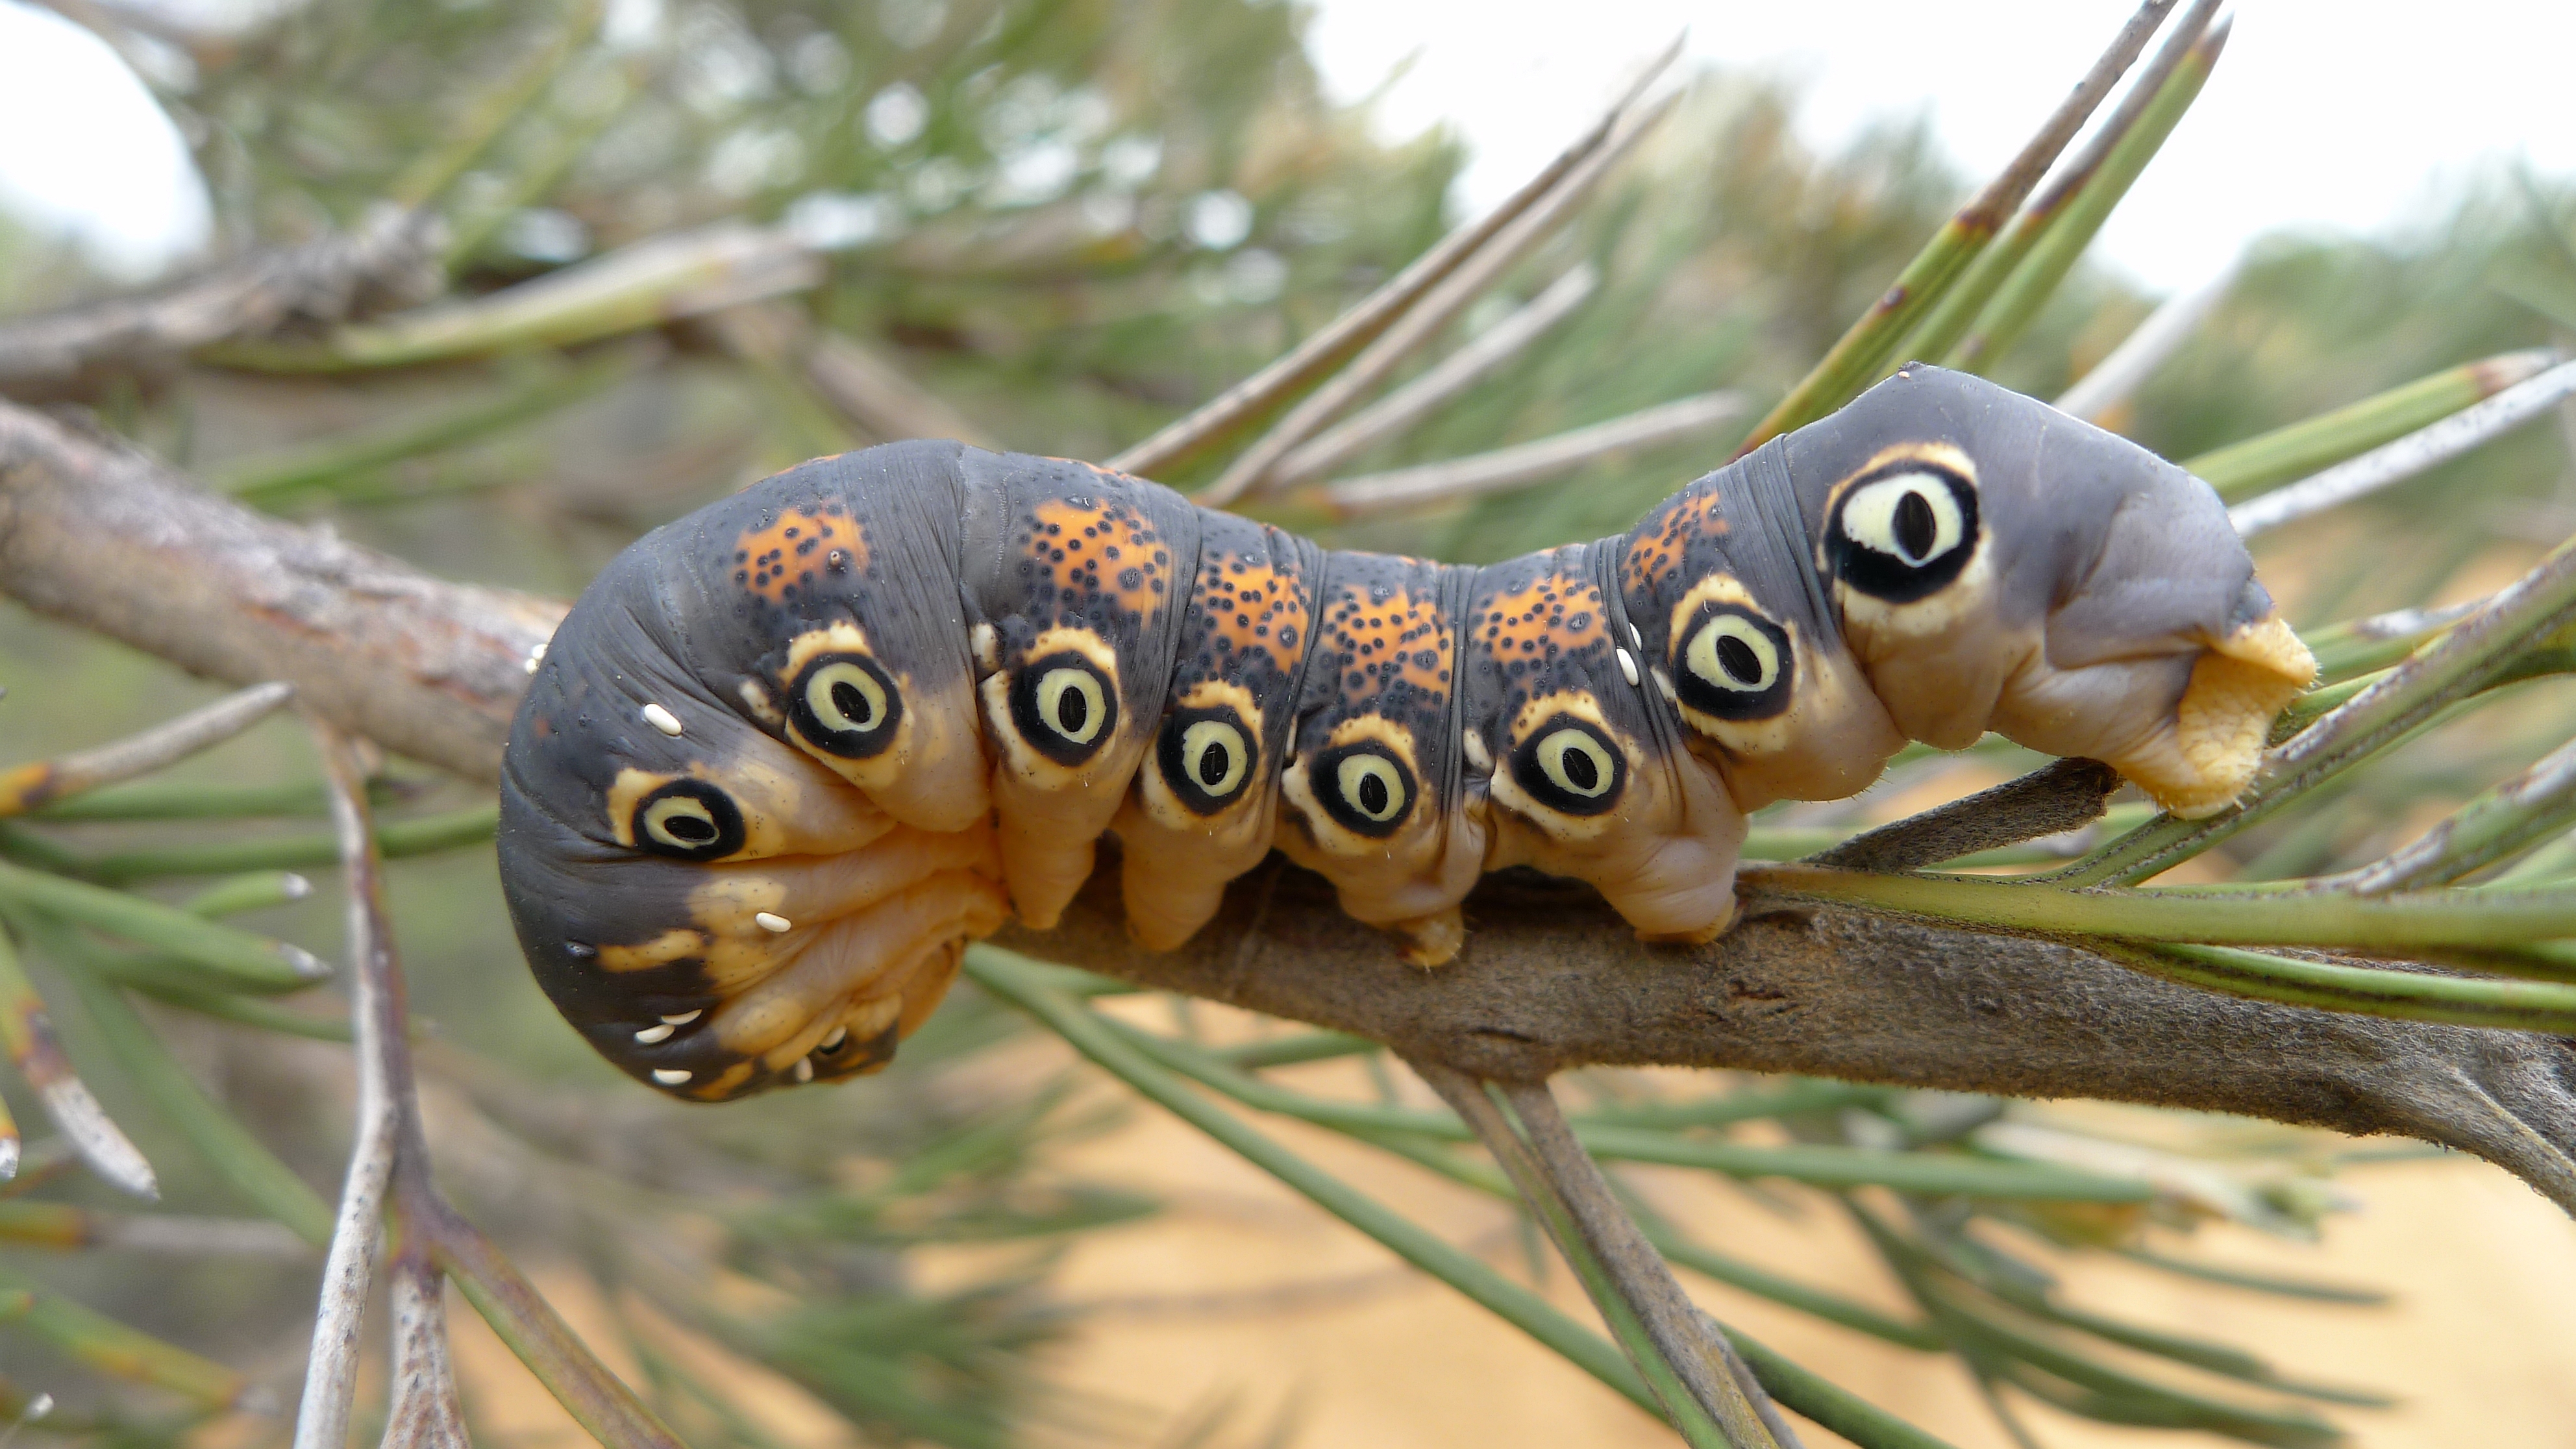 File:Caterpillar of a Dryandra Moth.jpg - Wikimedia Commons